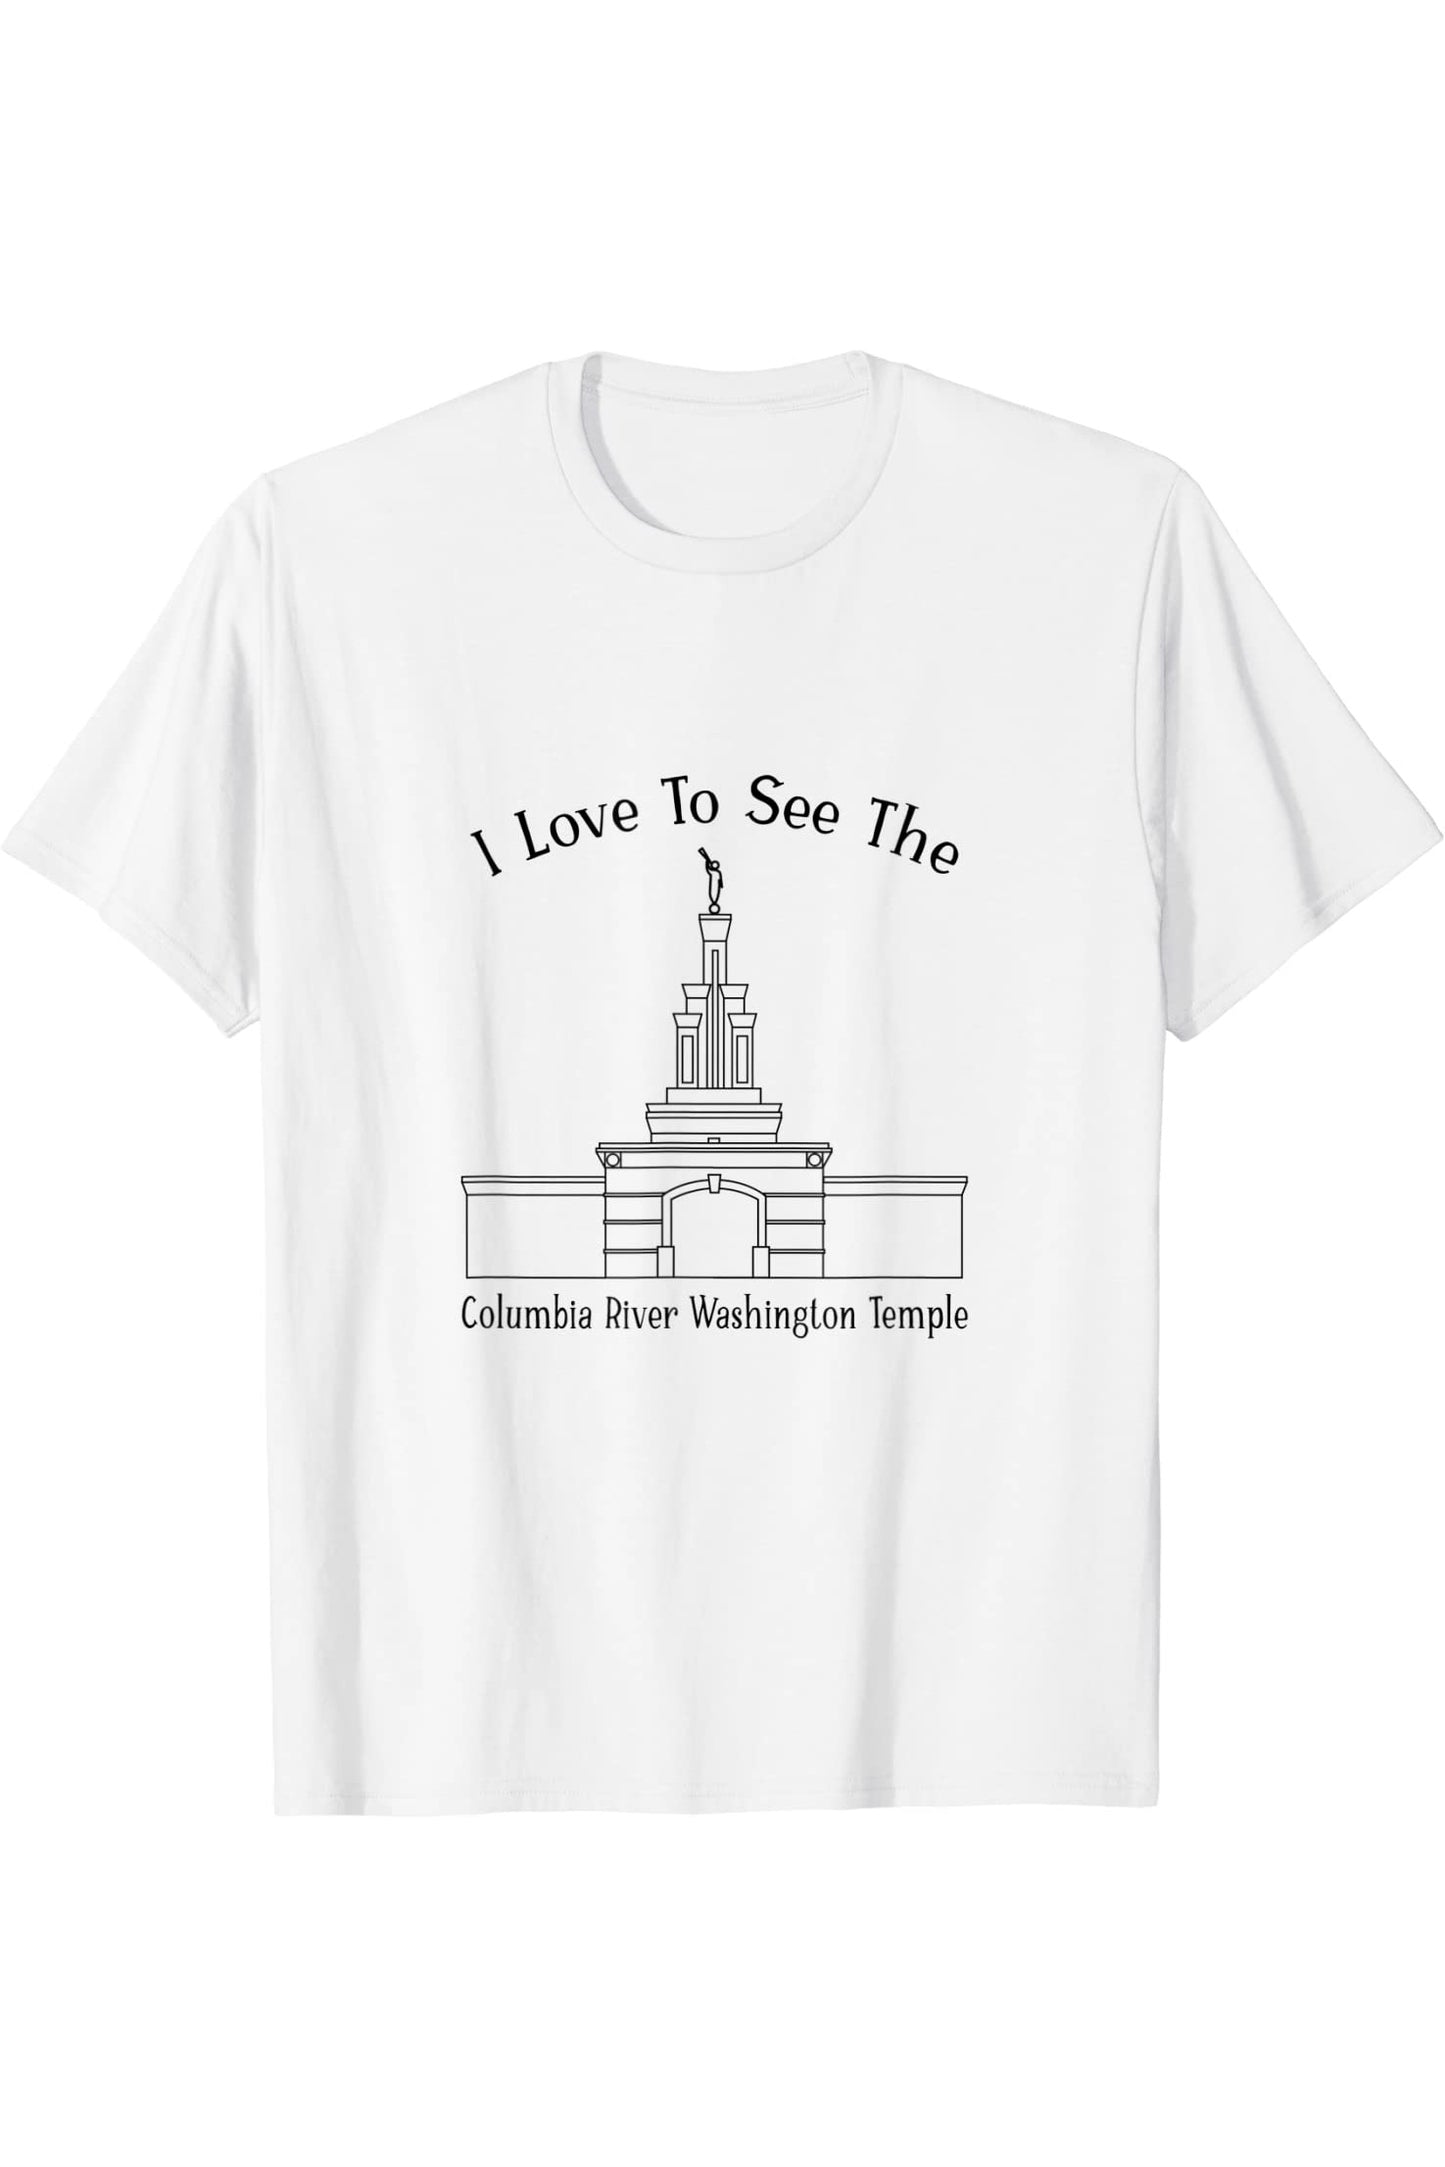 Columbia River Washington Temple T-Shirt - Happy Style (English) US